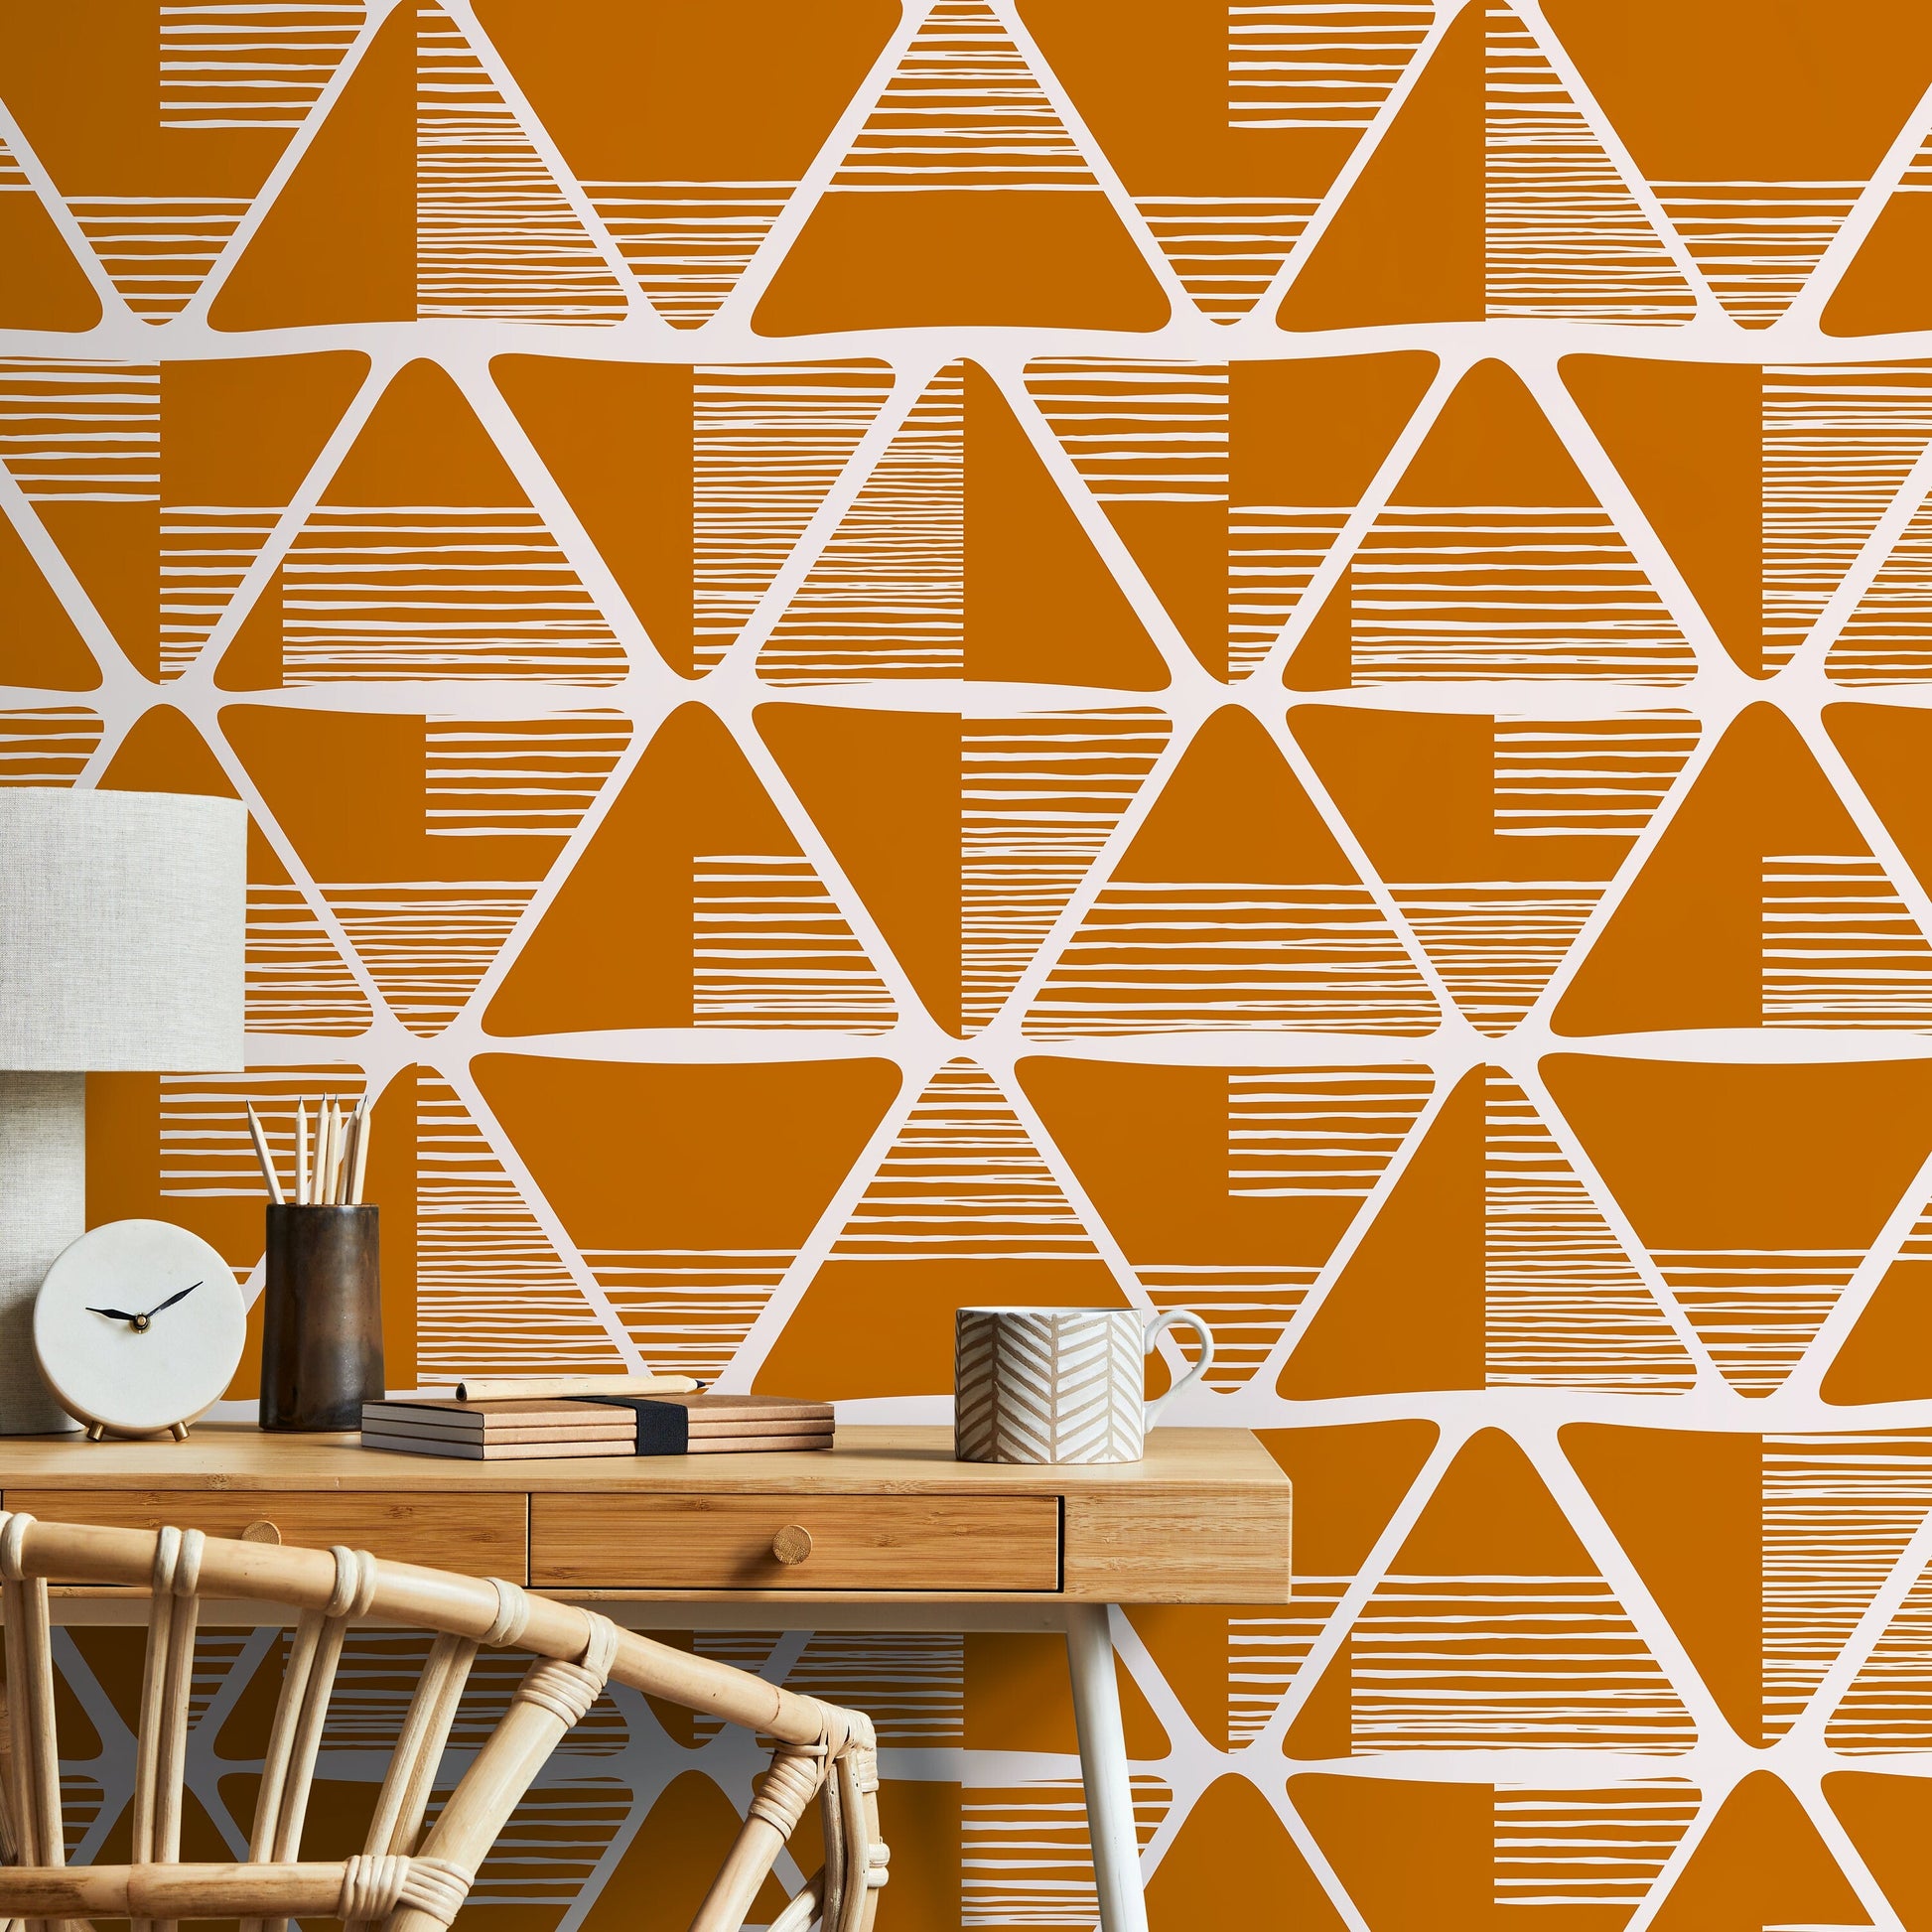 Wallpaper Peel and Stick Wallpaper Removable Wallpaper Home Decor Wall Art Wall Decor Room Decor / Orange Geometric Wallpaper - C466